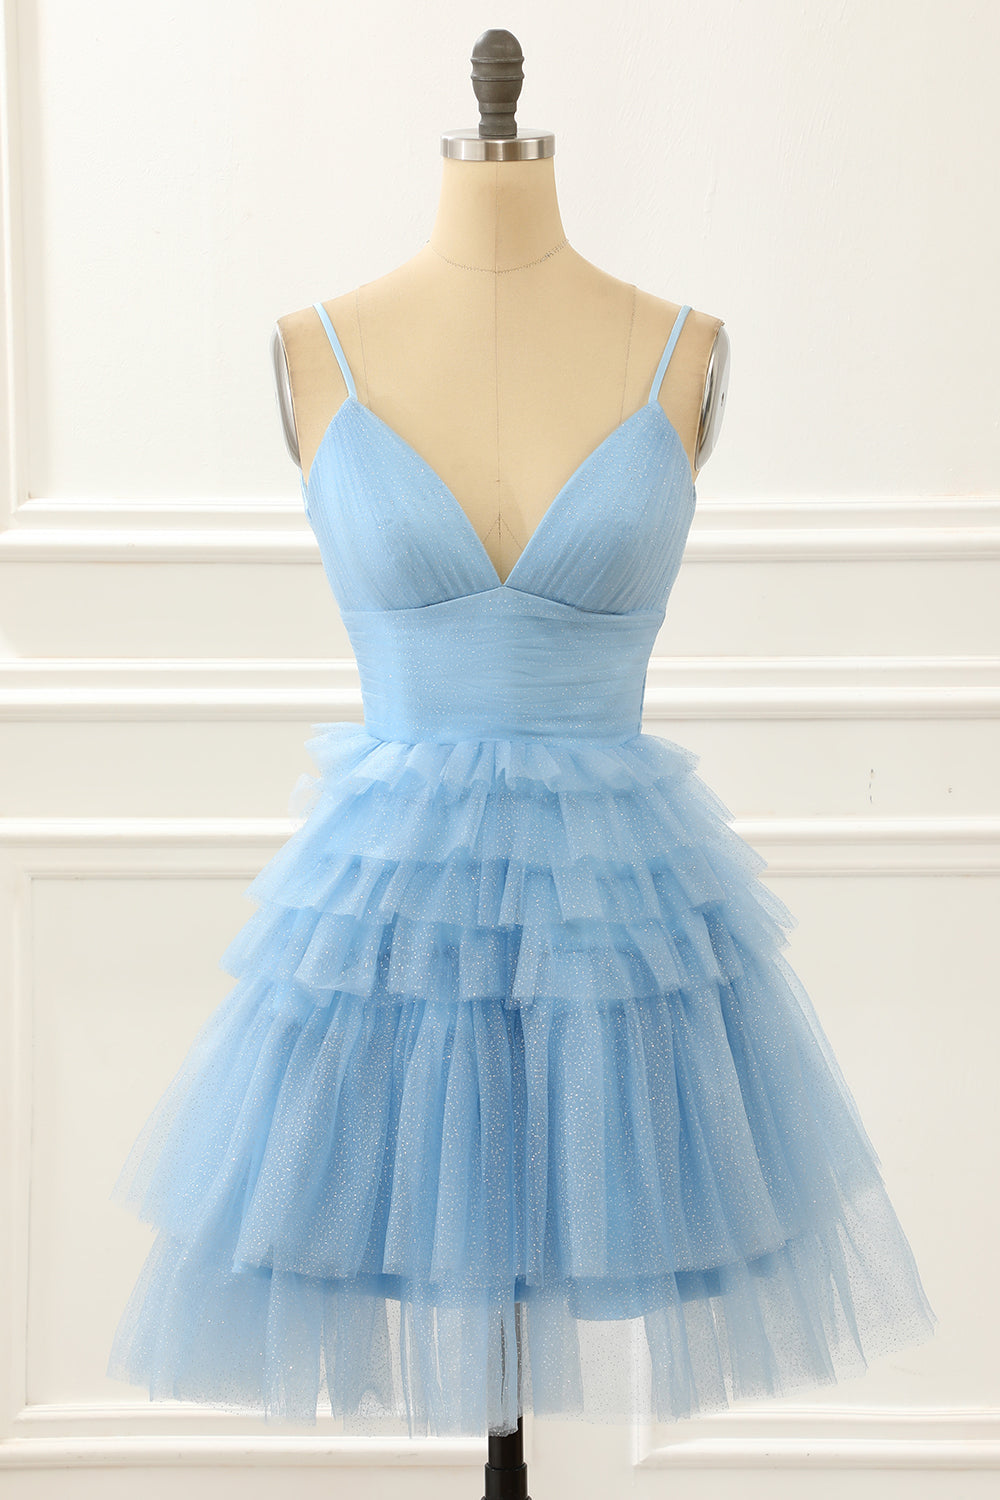 Party Dresses Designer, Light Blue A-line Cute Homecoming Dress with Ruffles